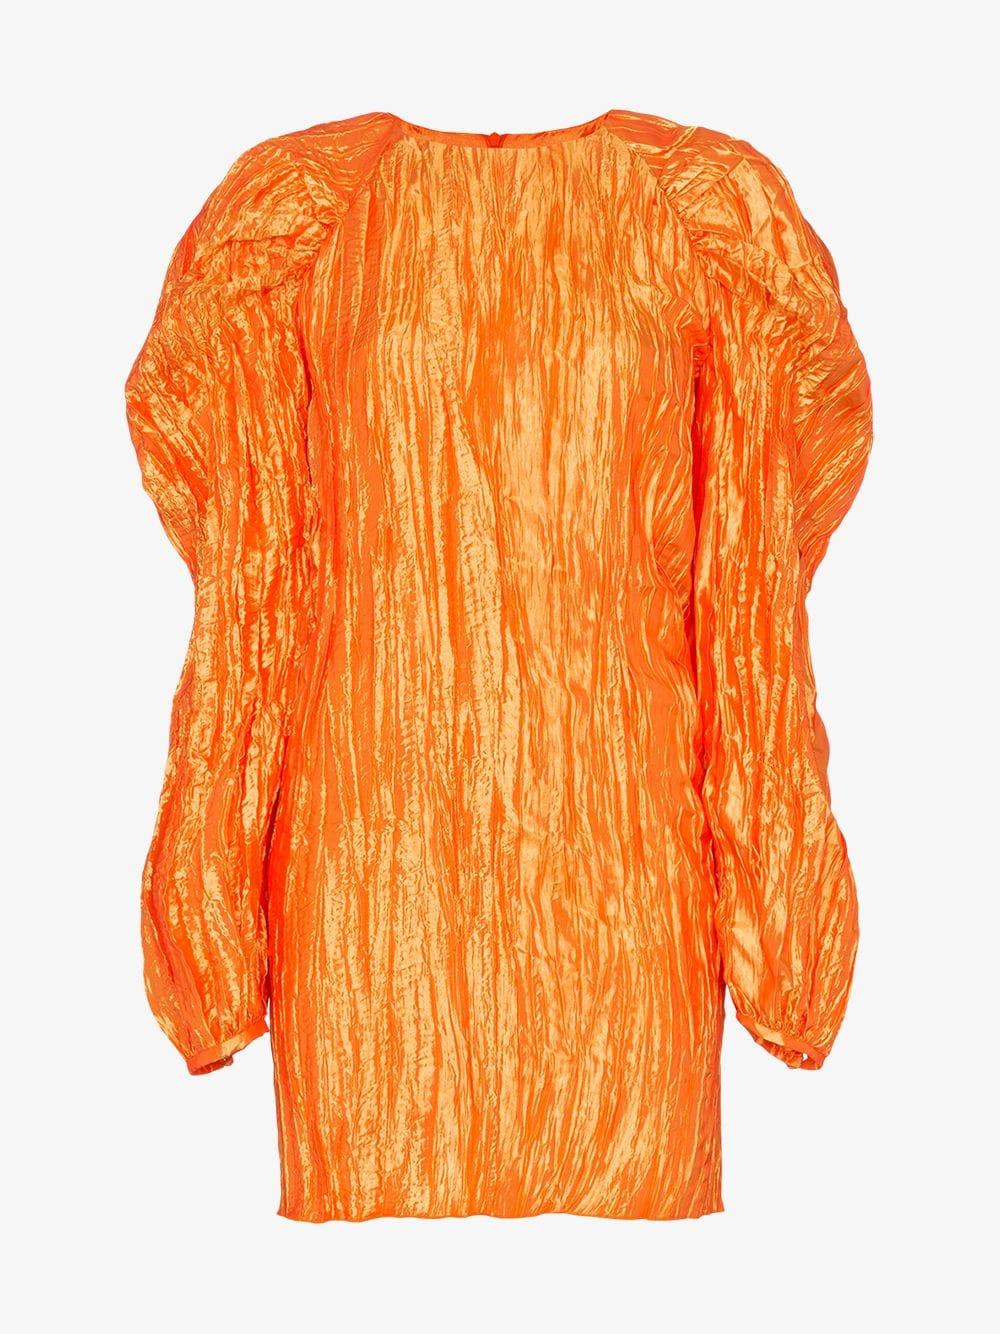 ROTATE BIRGER CHRISTENSEN Synthetic Textured Crinkle Mini Dress in Orange -  Lyst